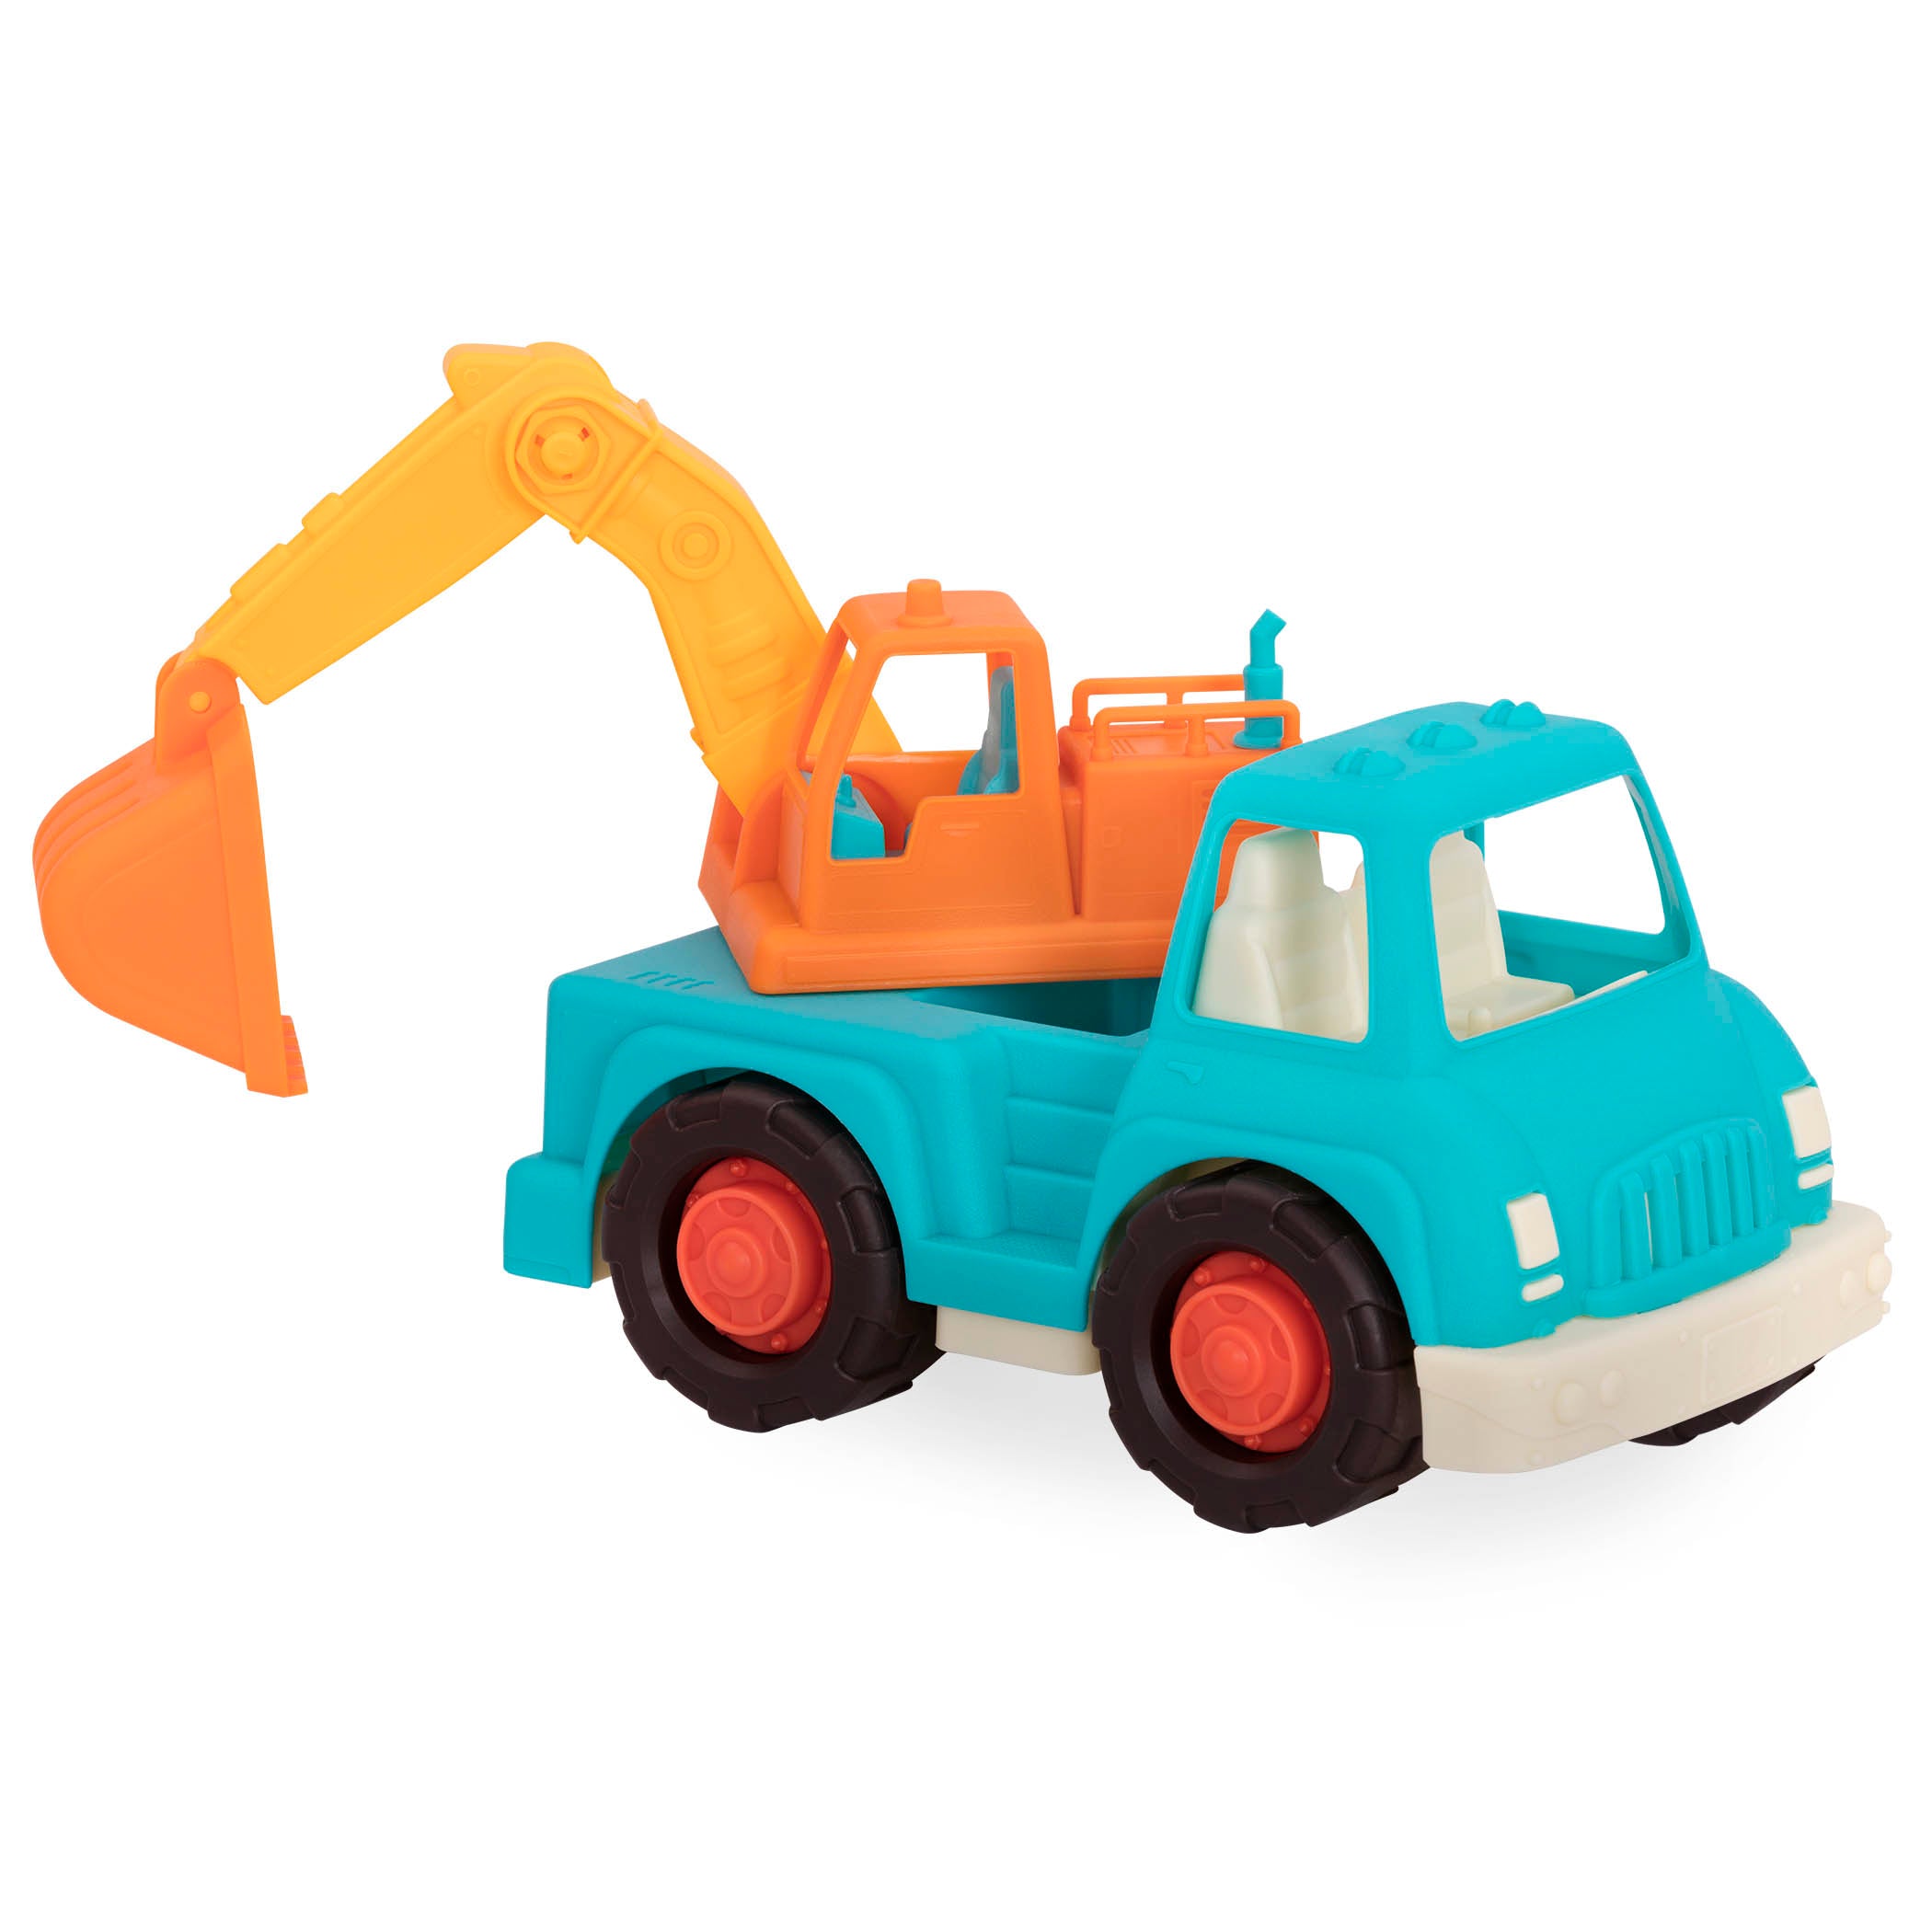 Toy excavator truck.